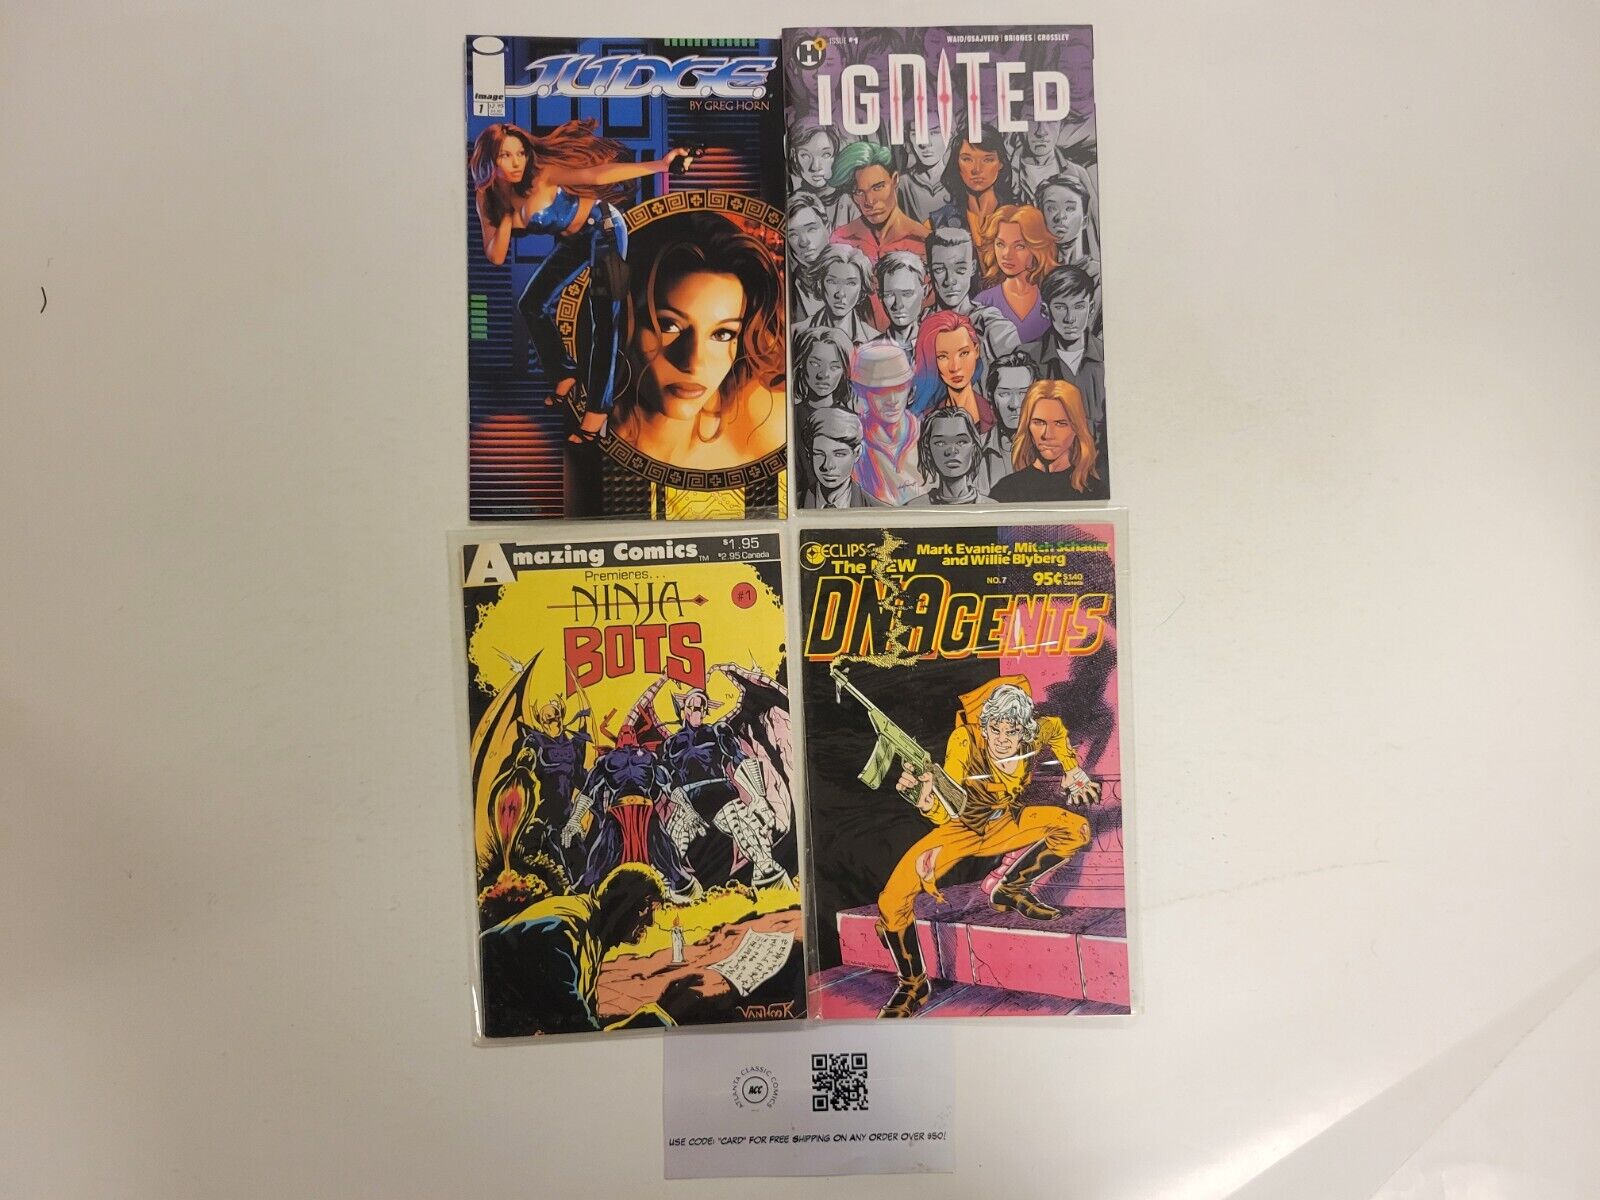 4 Image Eclipse Comics #1 Ignited #1 JUDGE #1 Ninja Bots #7 DNAgents 23 TJ25